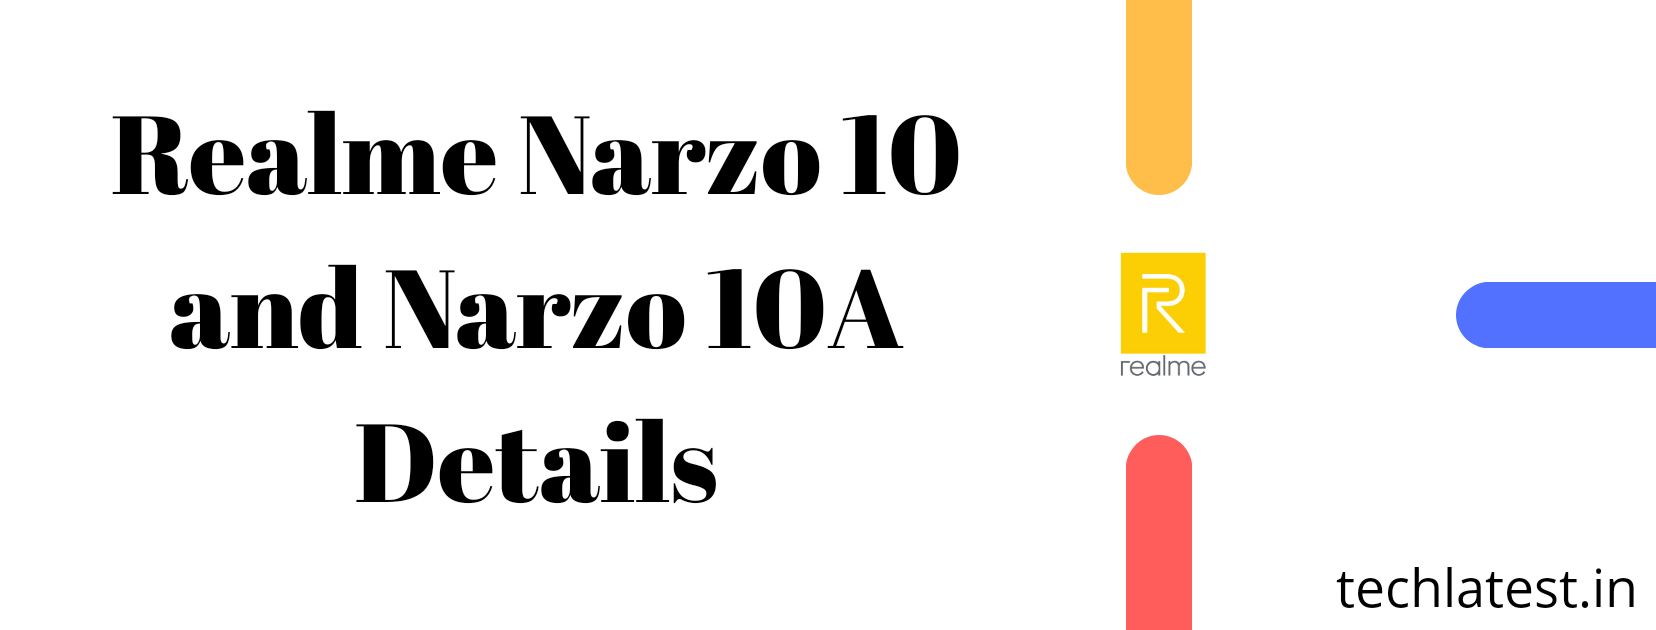 Realme Narzo launch details